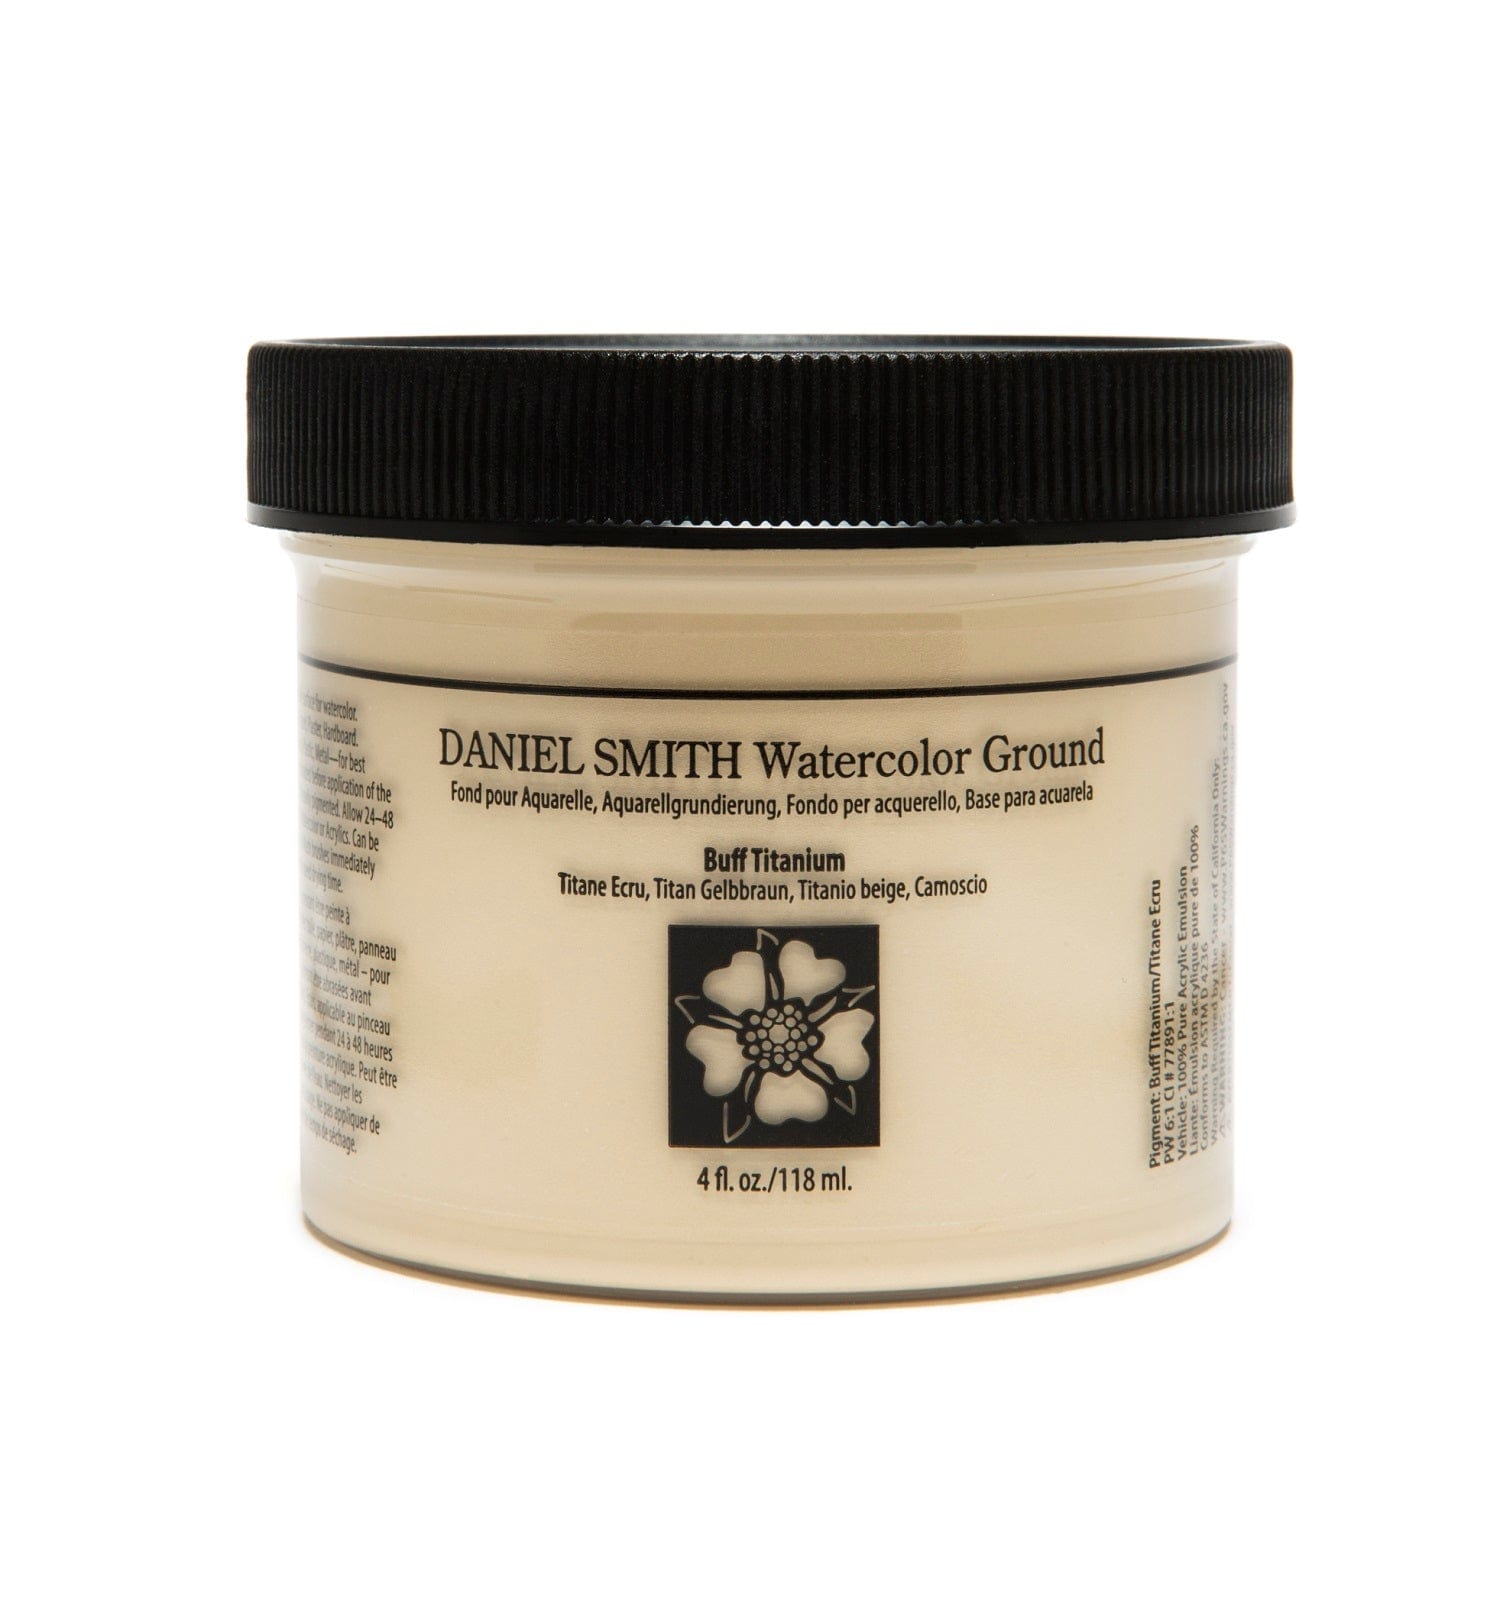 Daniel Smith Malemiddel Daniel Smith Watercolor Ground - Buff titanium - 118 ml